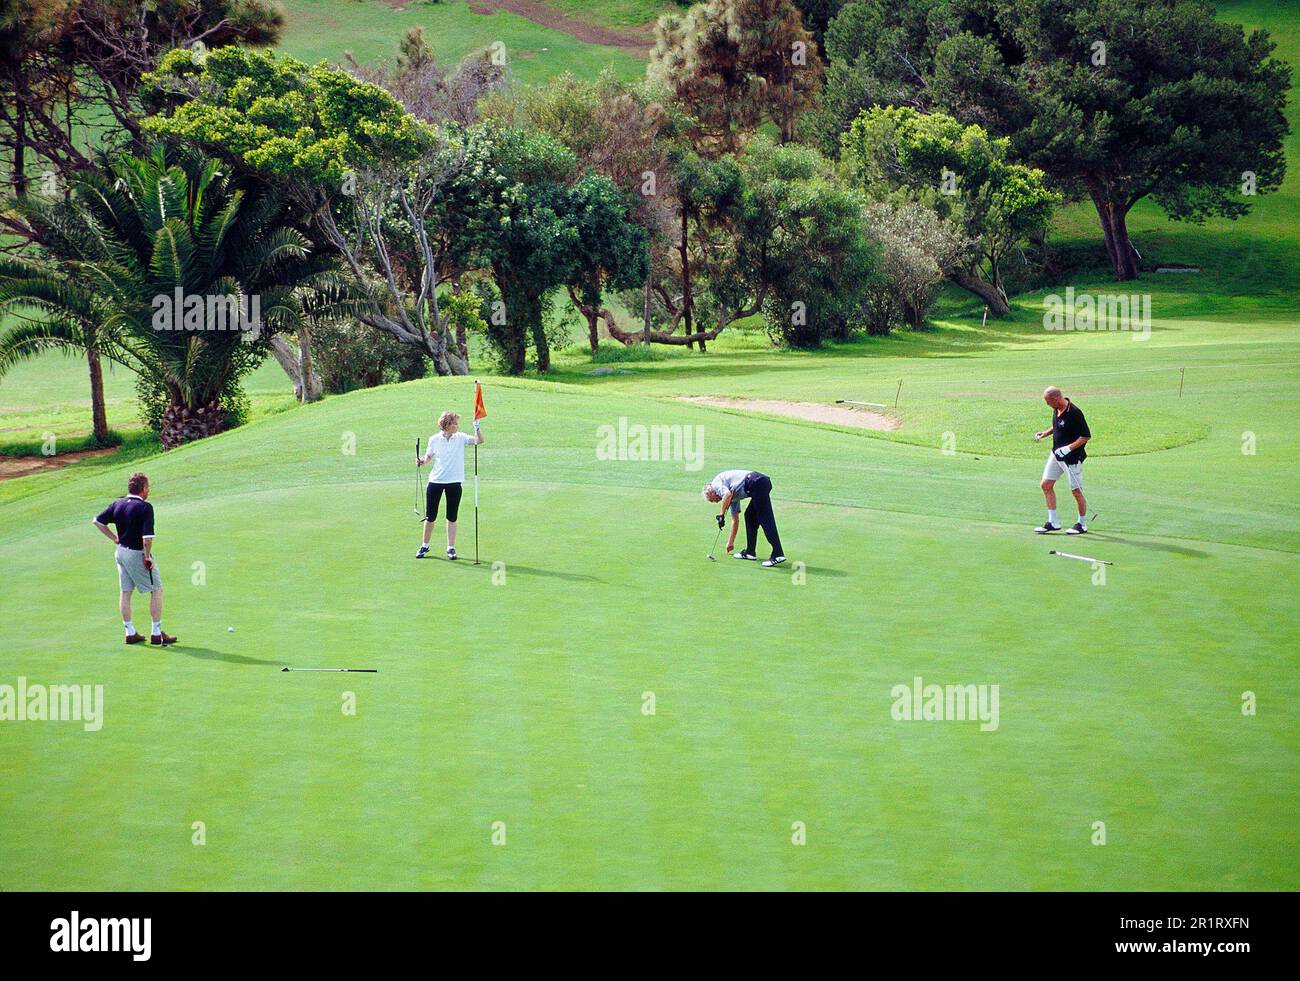 Four people playing golf. Caldera de Bandama Golf Club, Gran Canaria island, Canary Islands, Spain. Stock Photo